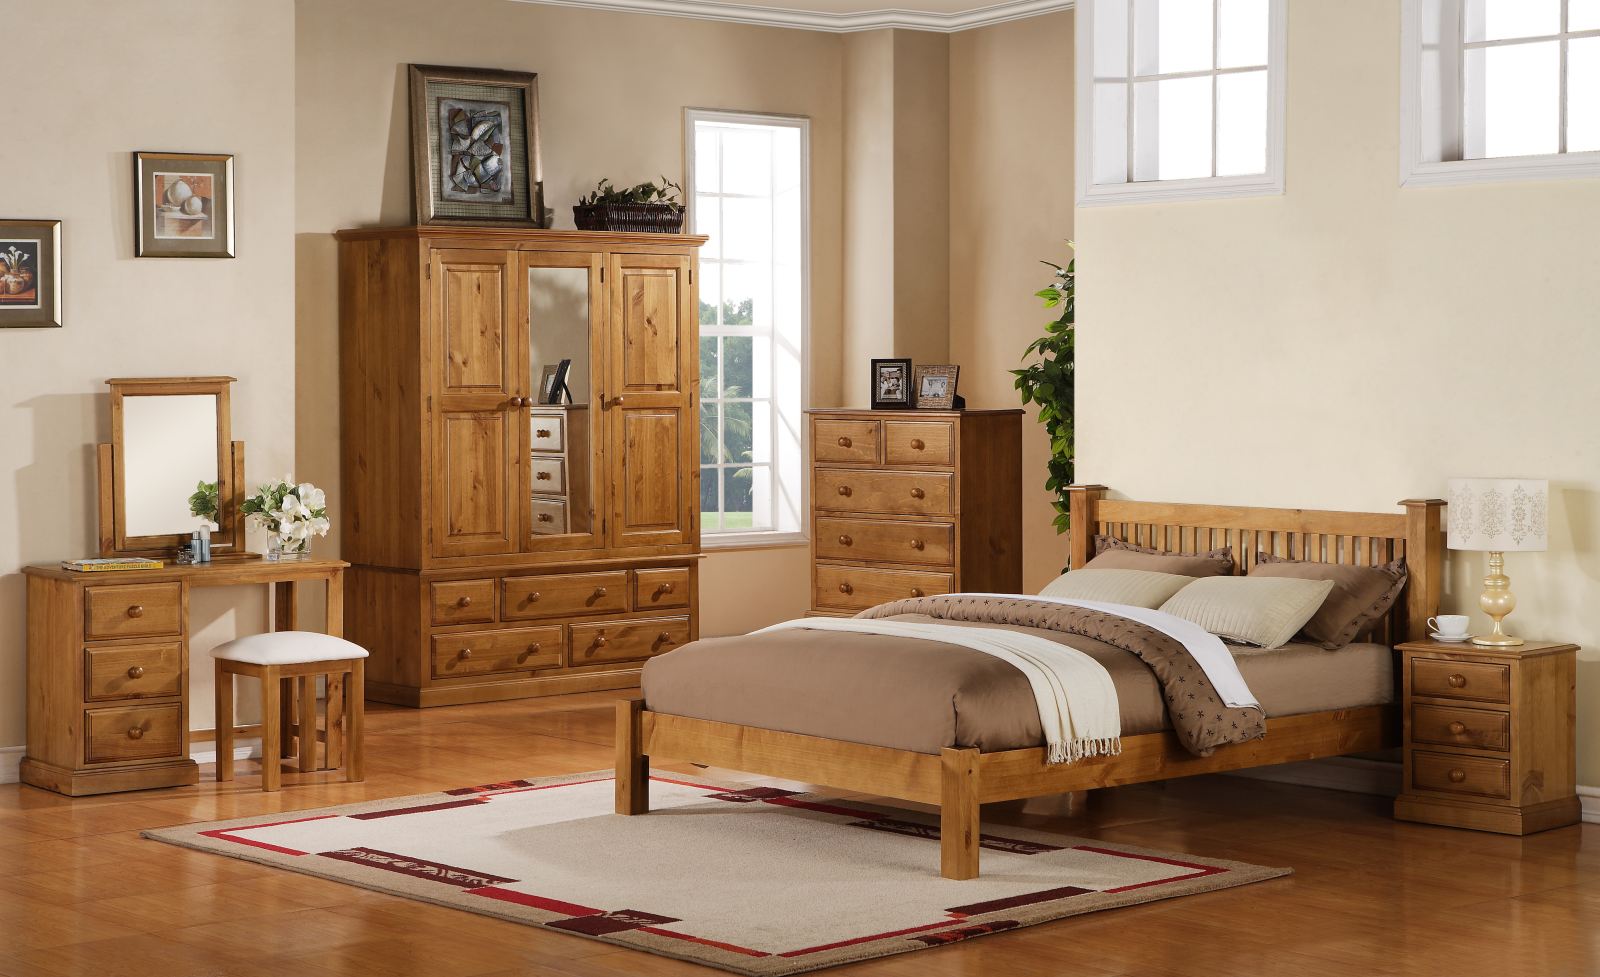 Pine bedroom furniture shopping tips: